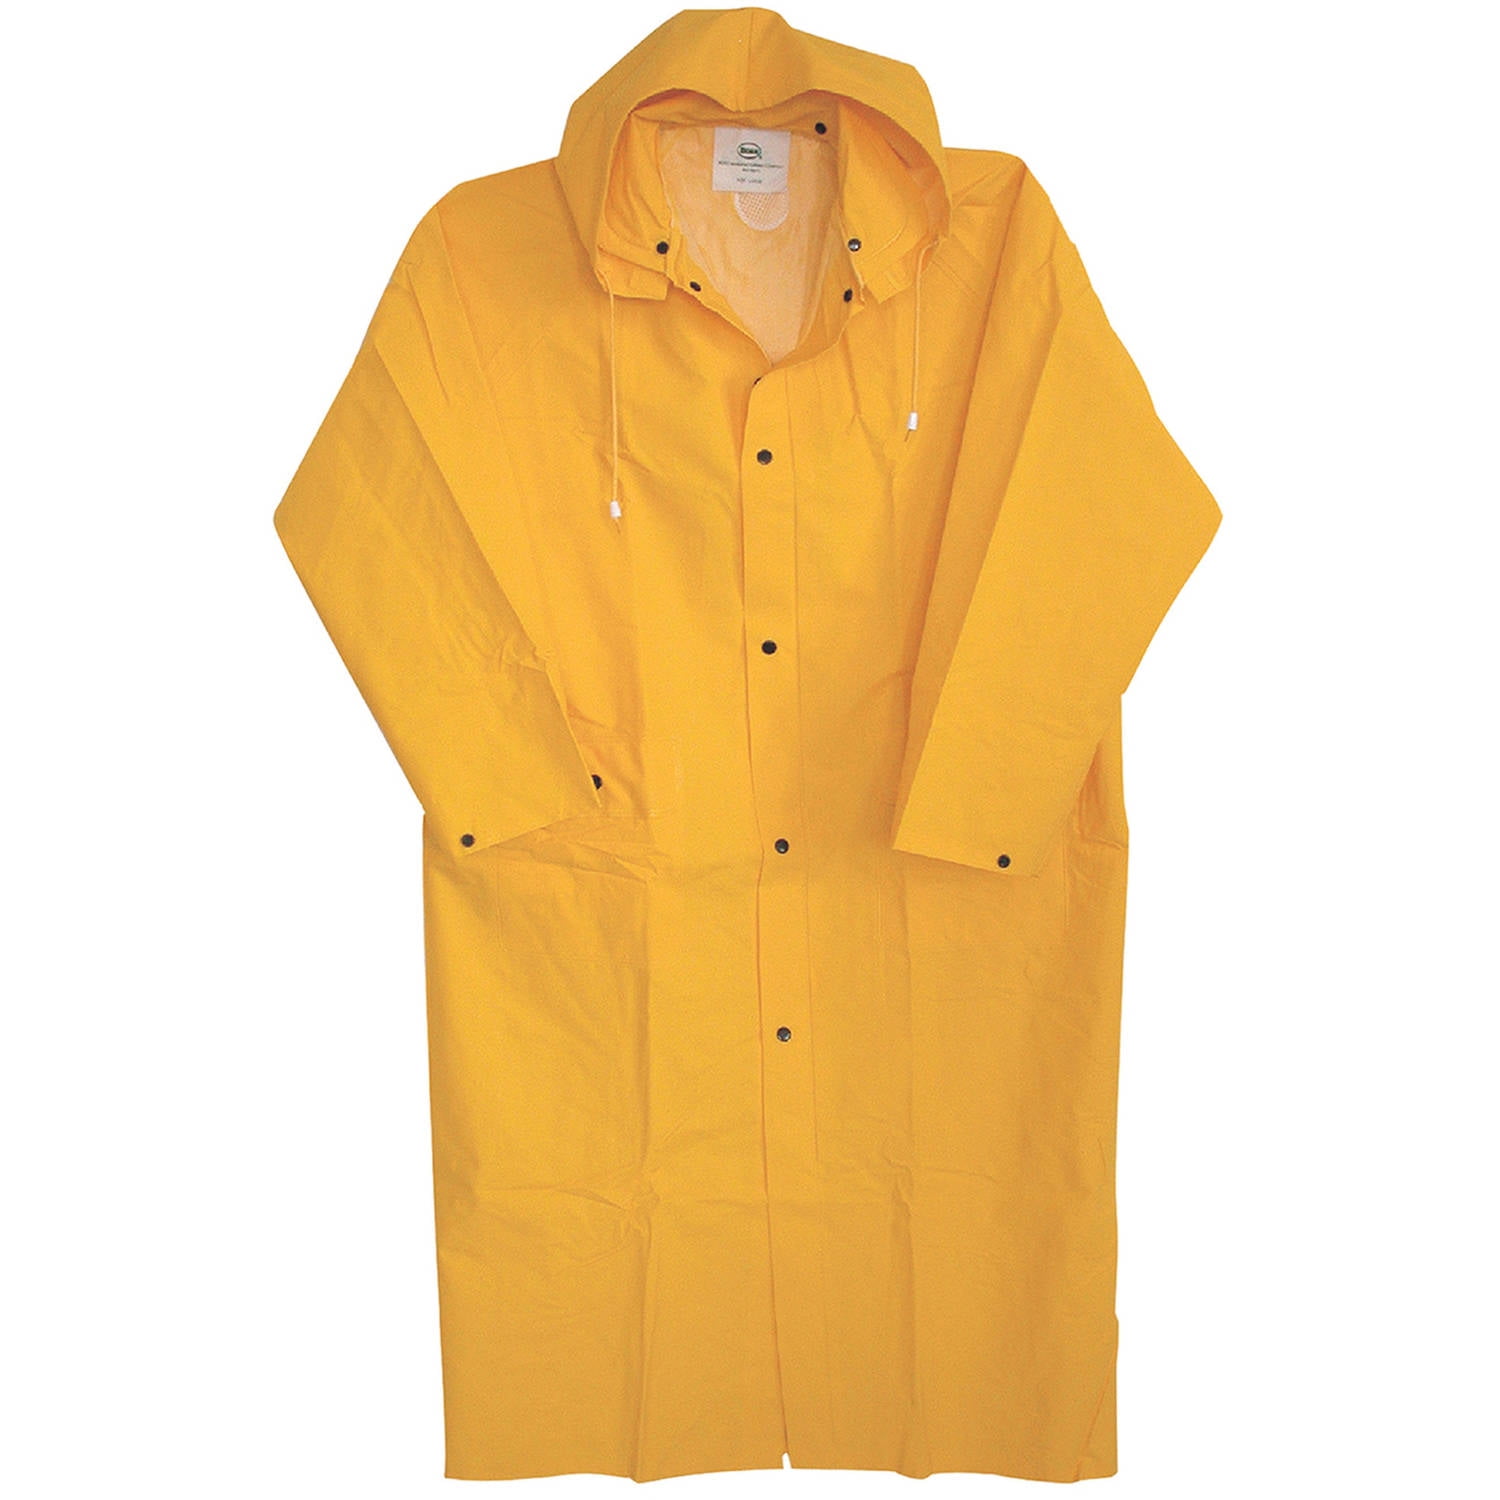 new Yellow PVC/Polyester Long Rain Coat Gear  Raincoat 35mm hooded S-3XL men 